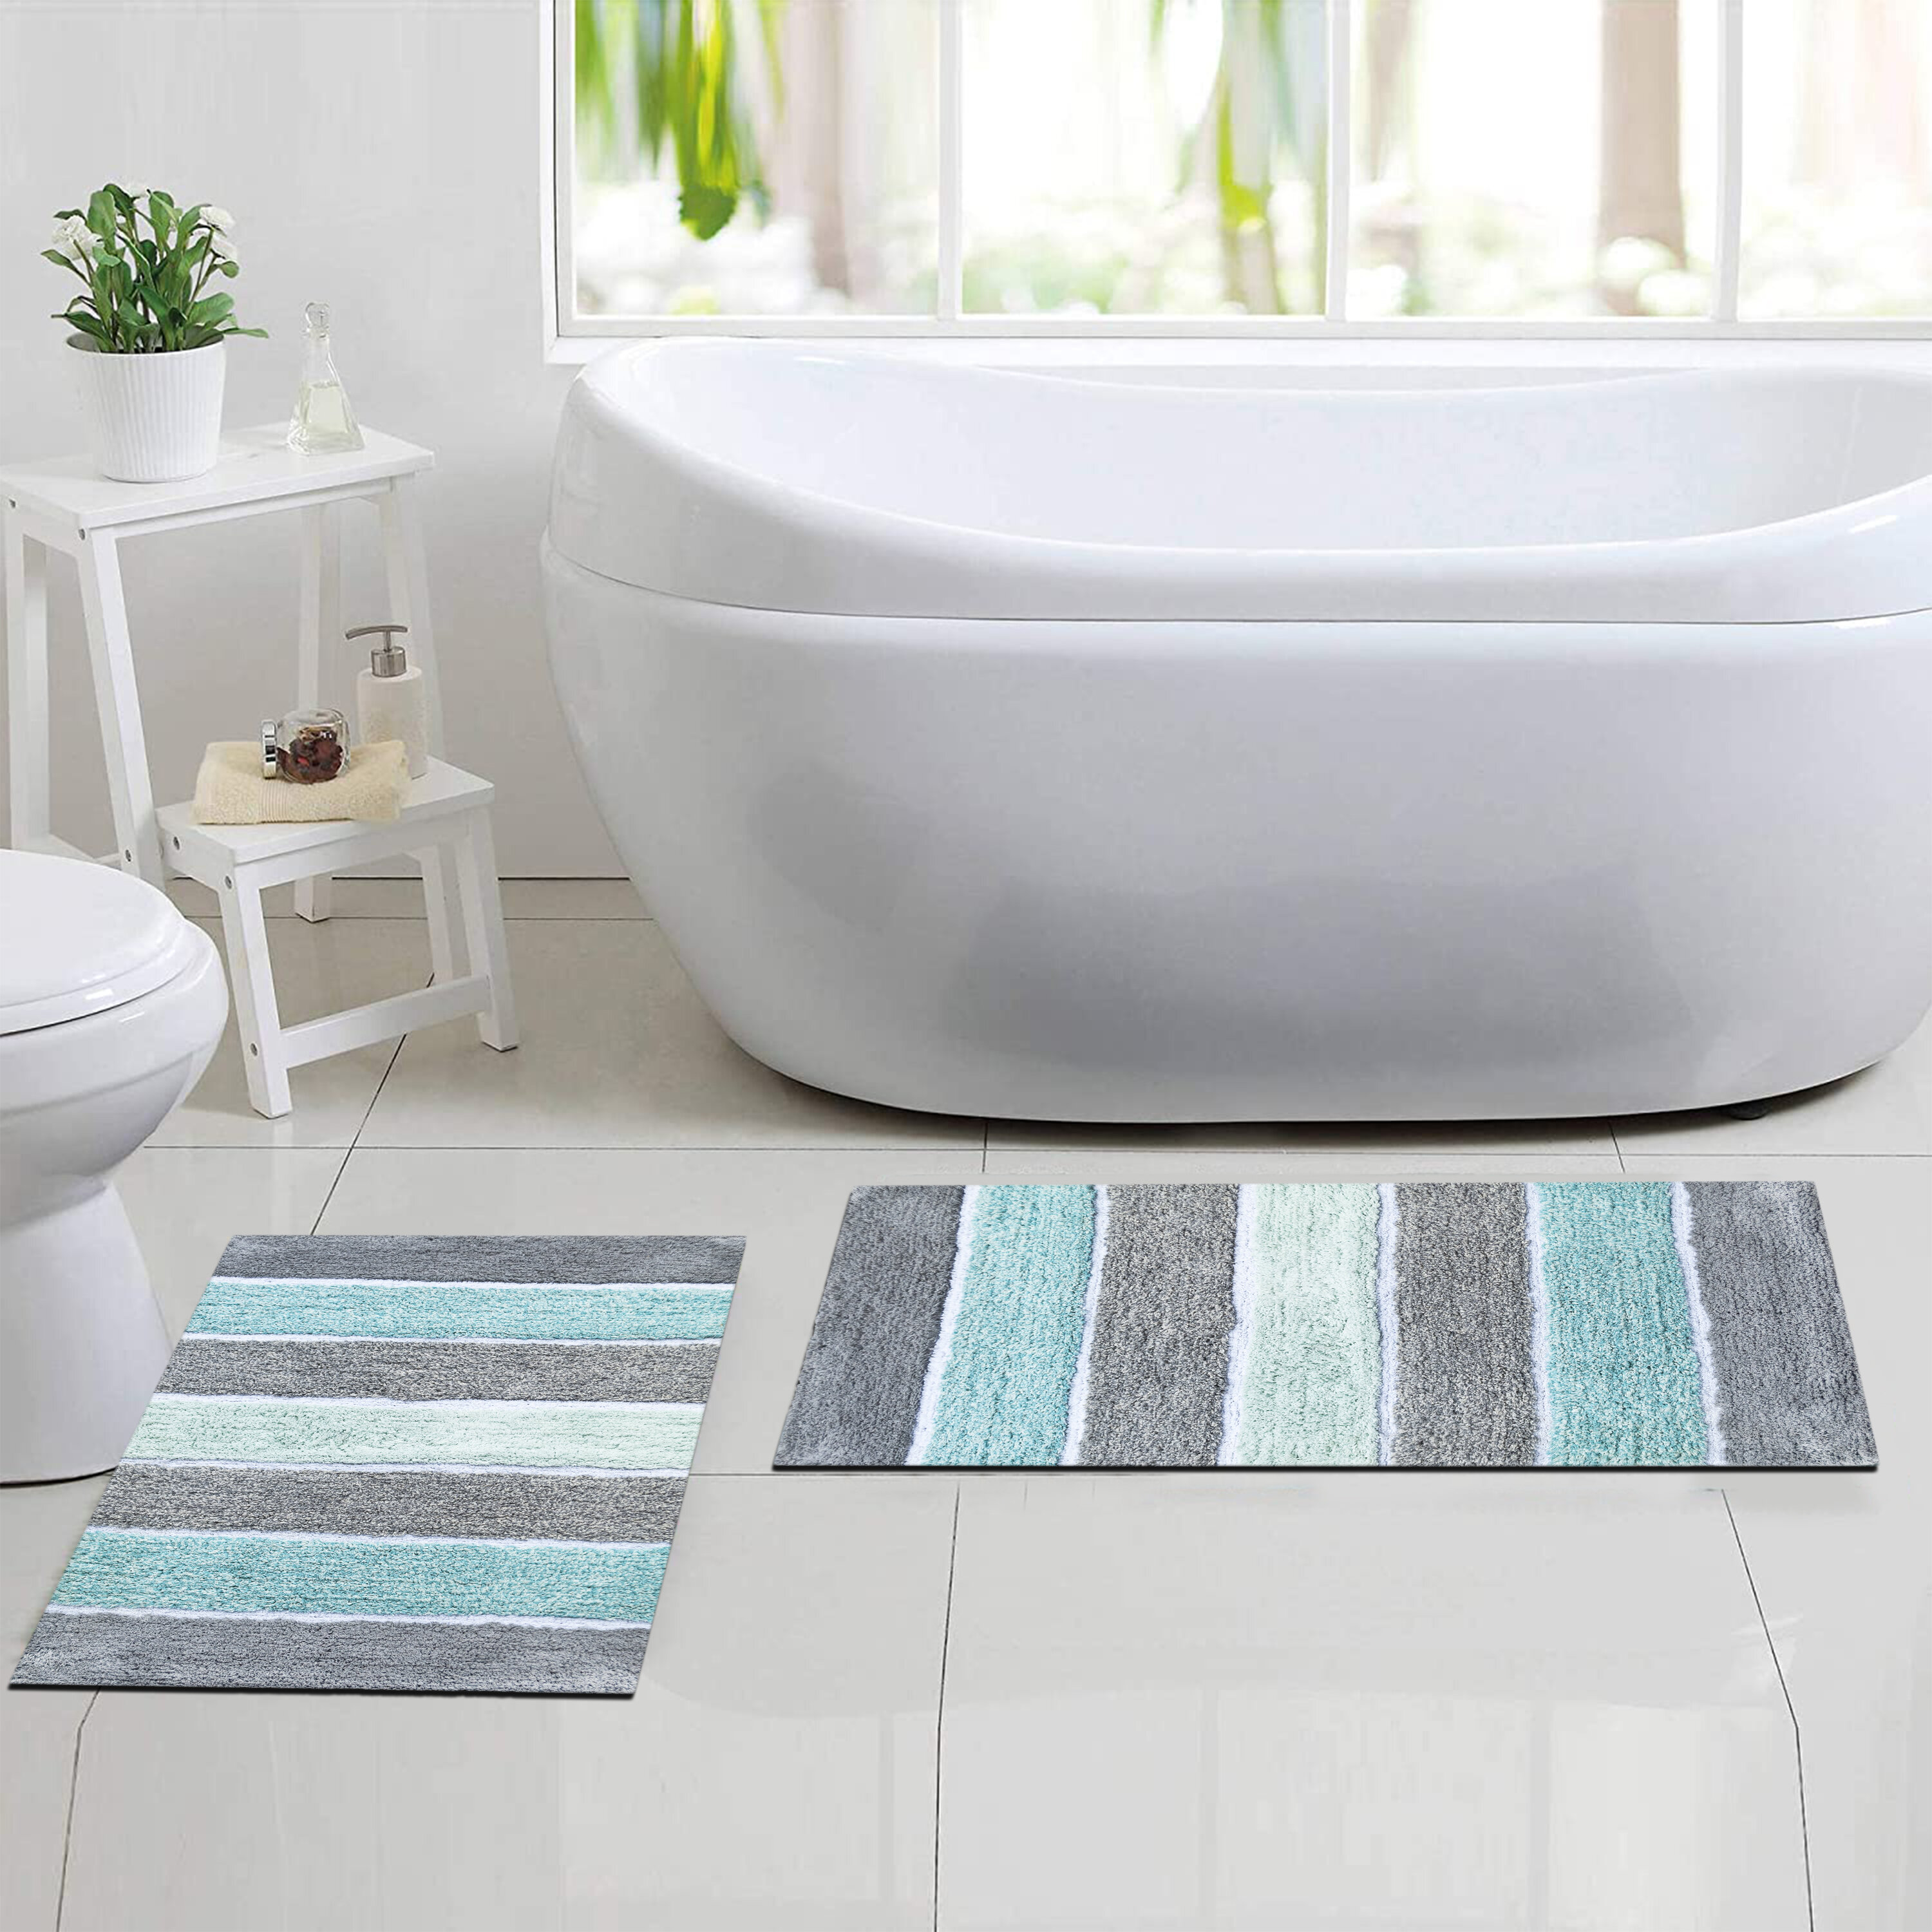 Non-Slip Absorbent Bath Rug Mat For Bathroom Floor Towel Bath Mat,100% Cotton